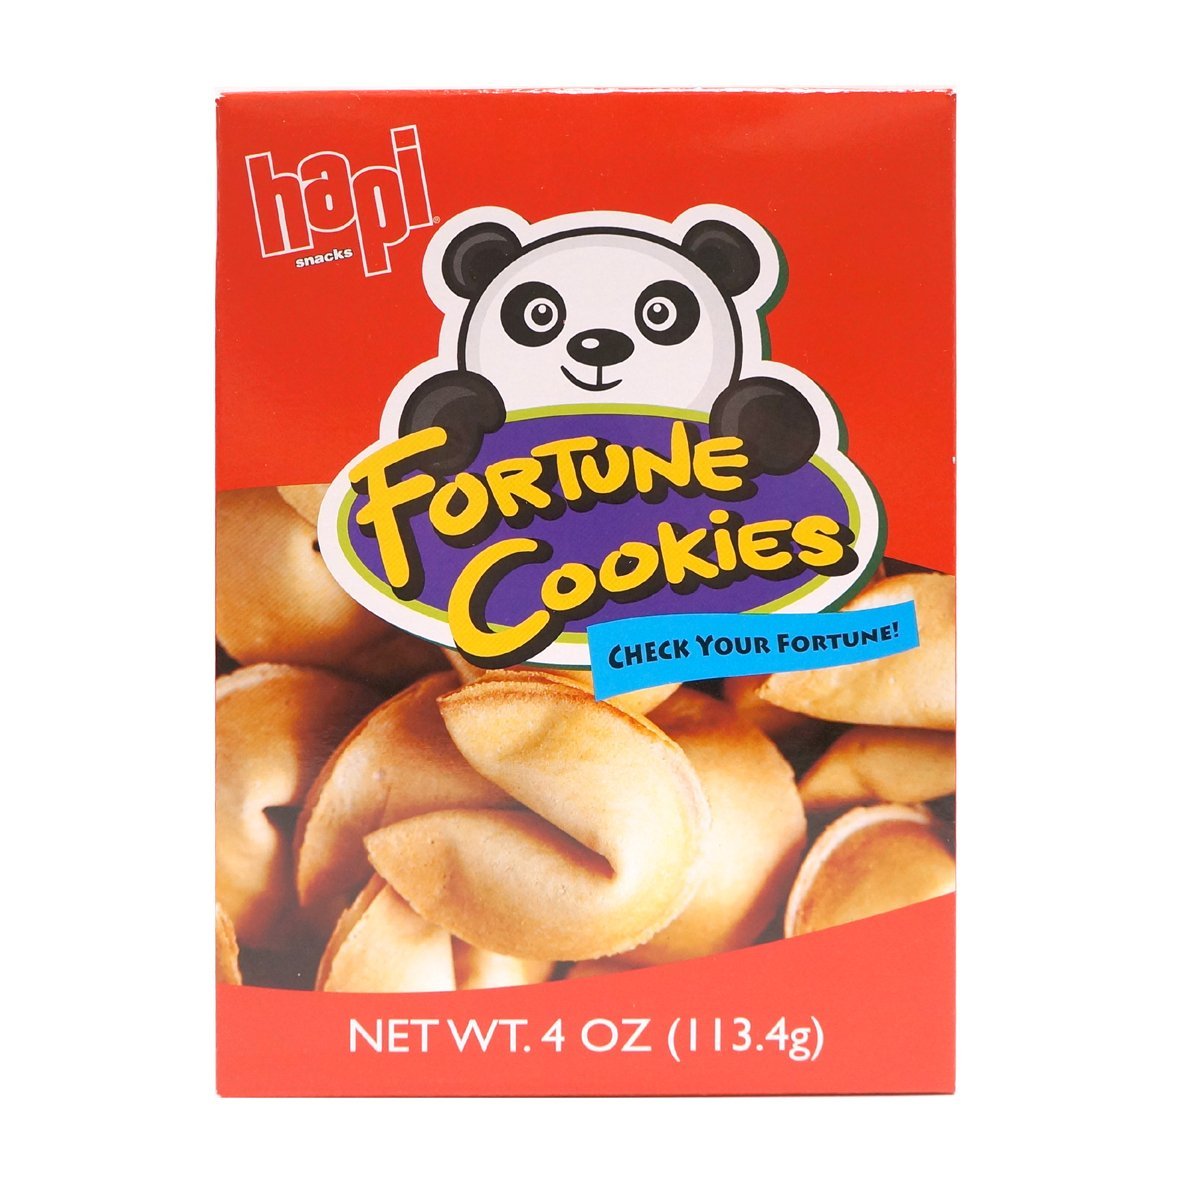 Fortune Cookies, 3 oz., 10 oz. & 1 lb.